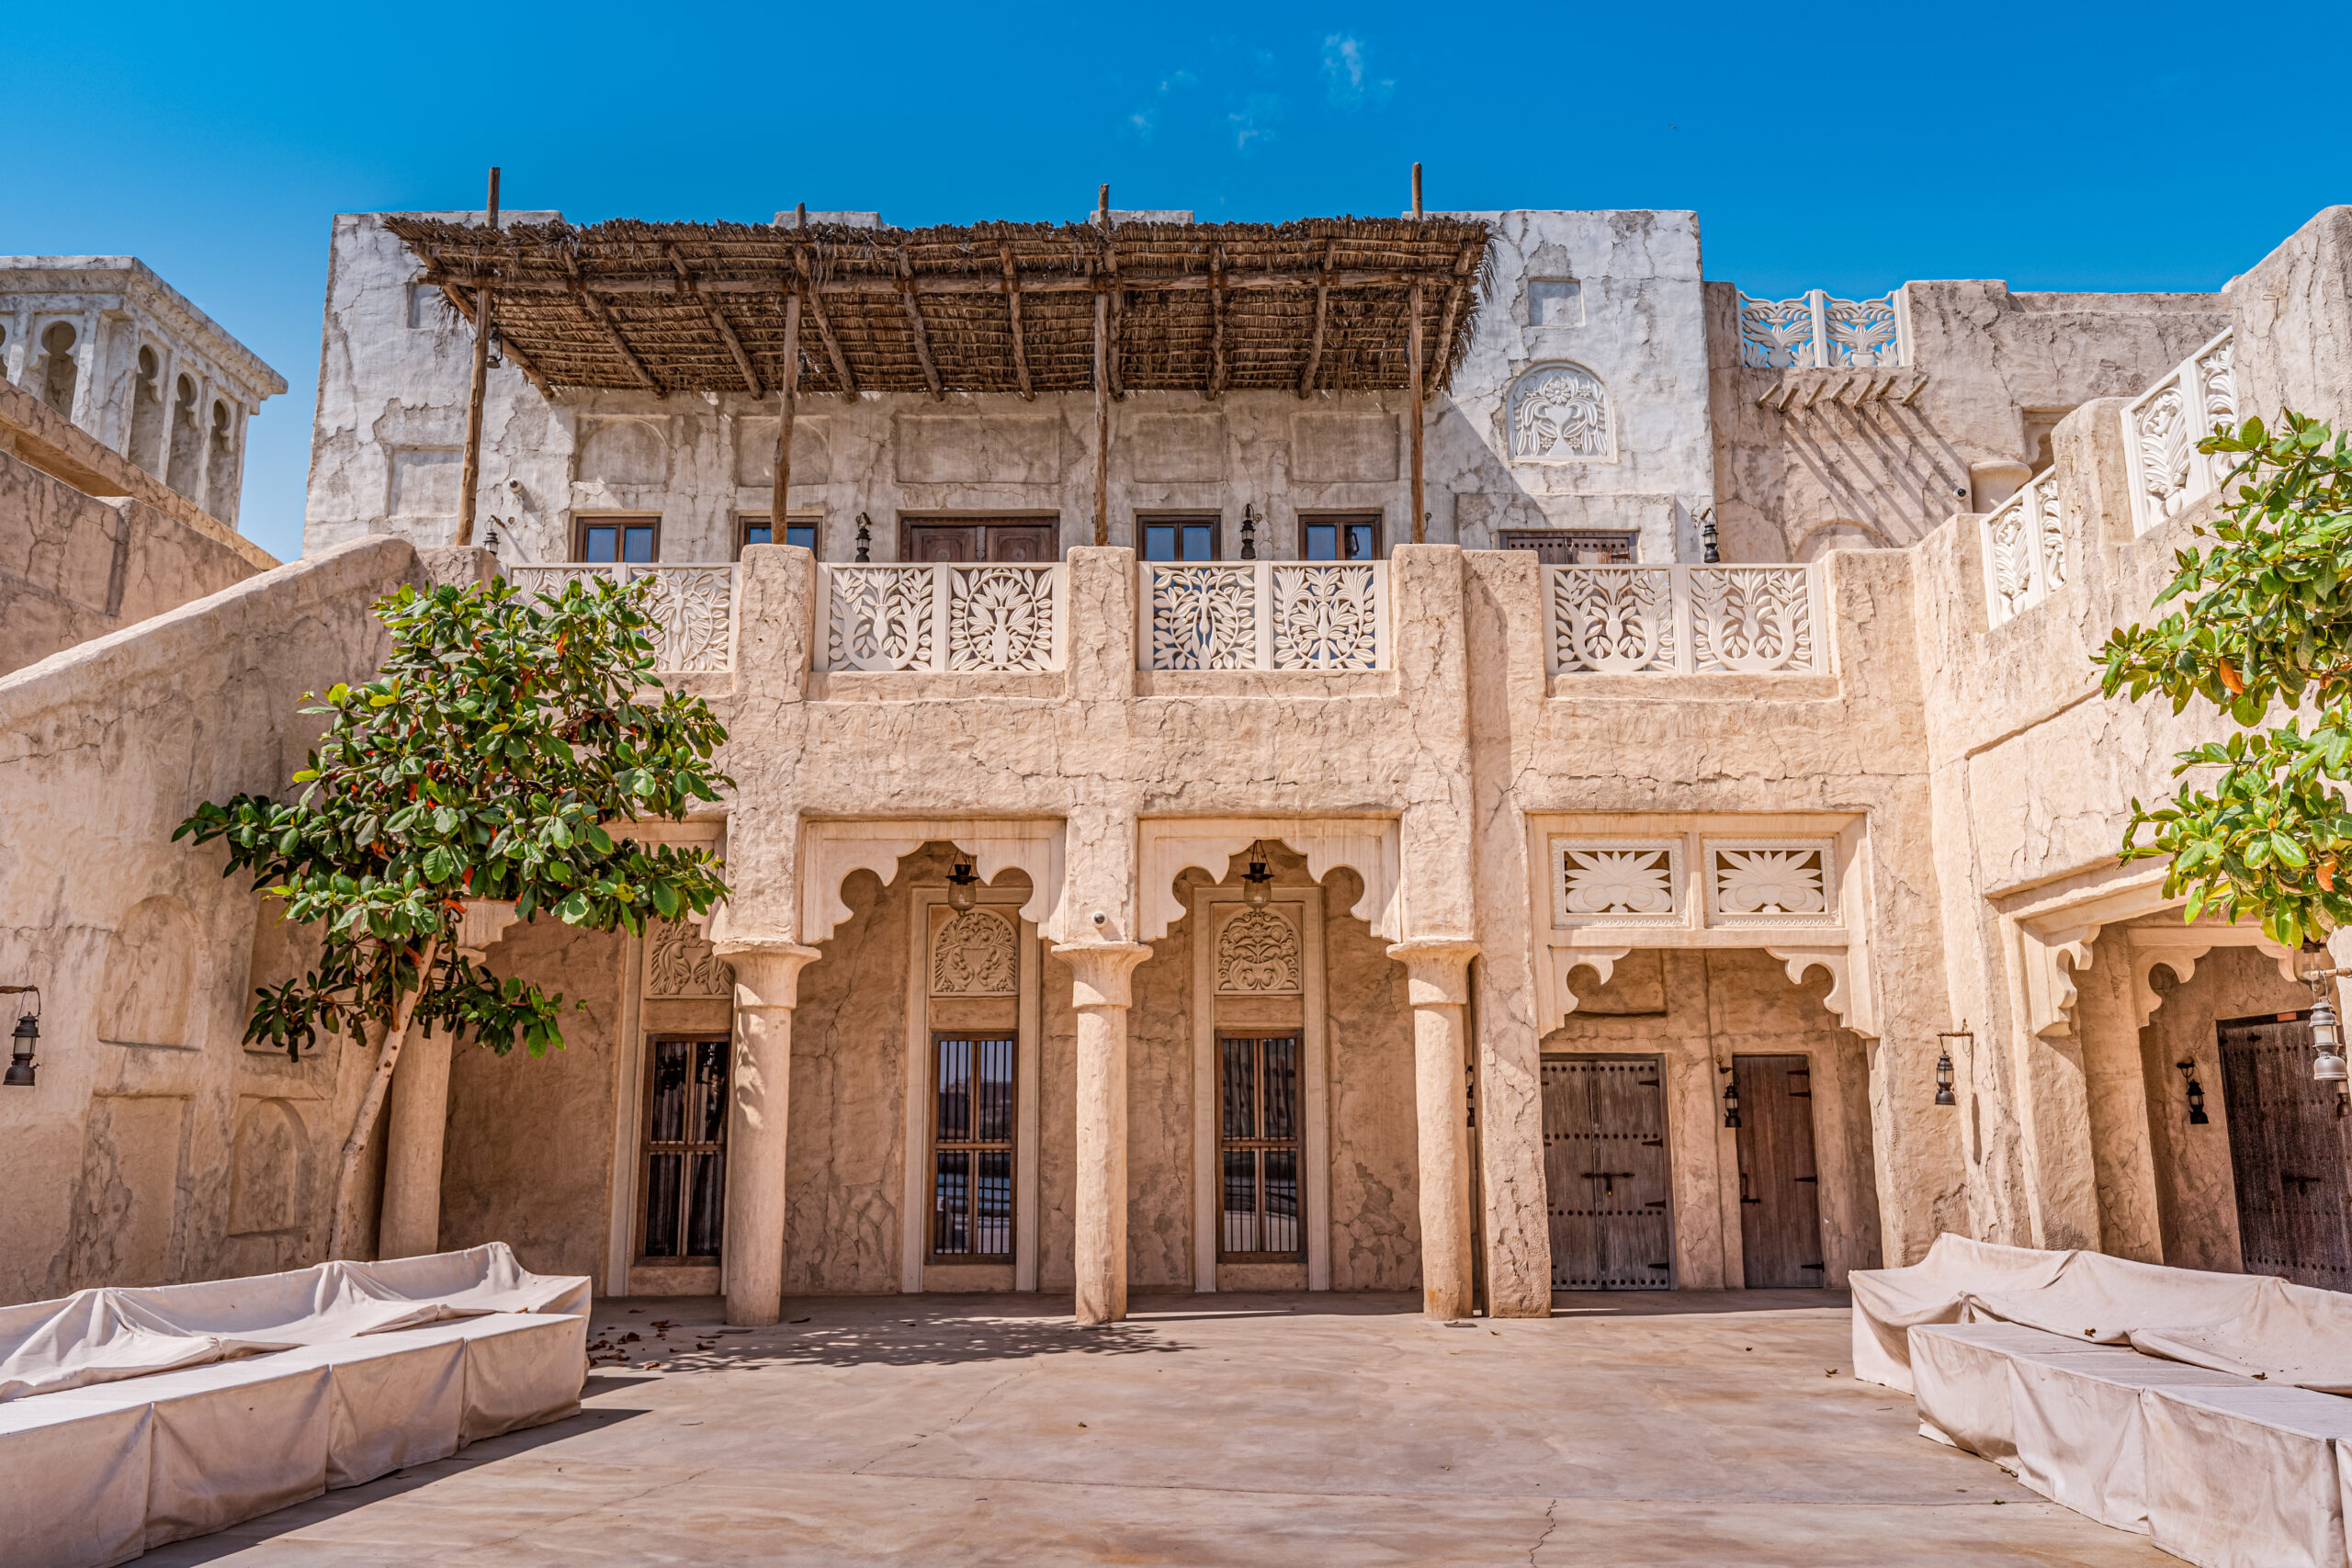 Dubai Heritage Village - House of Sheikh Saeed Al Maktoum